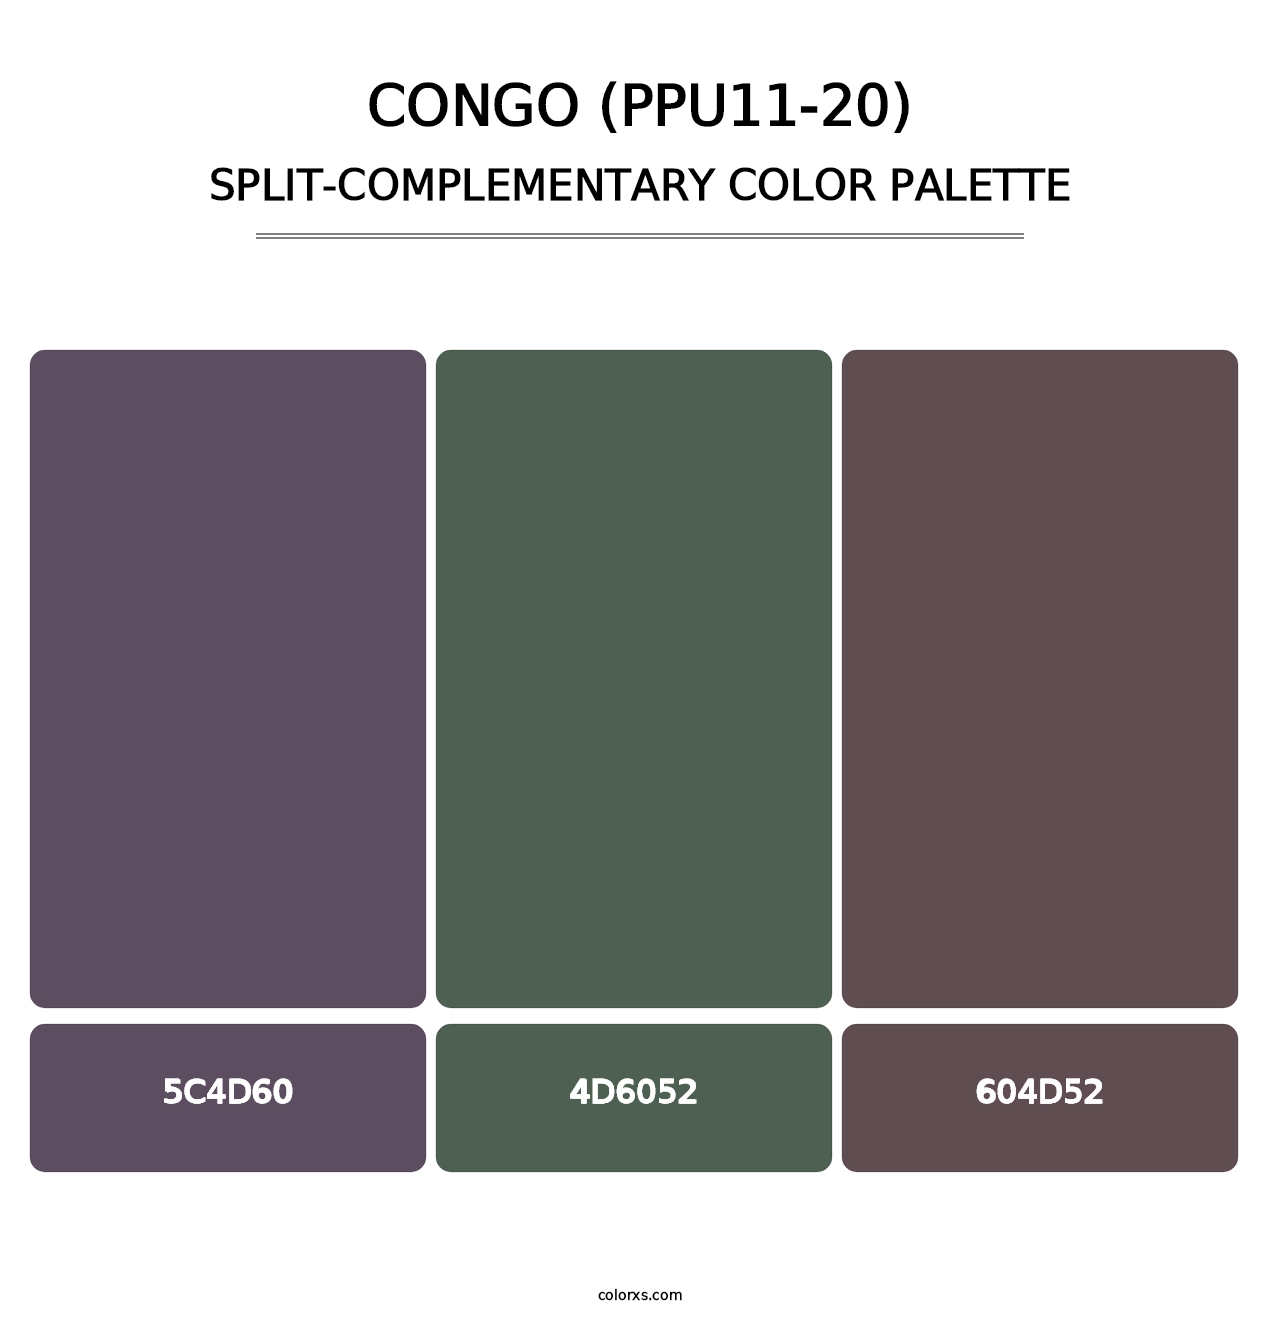 Congo (PPU11-20) - Split-Complementary Color Palette